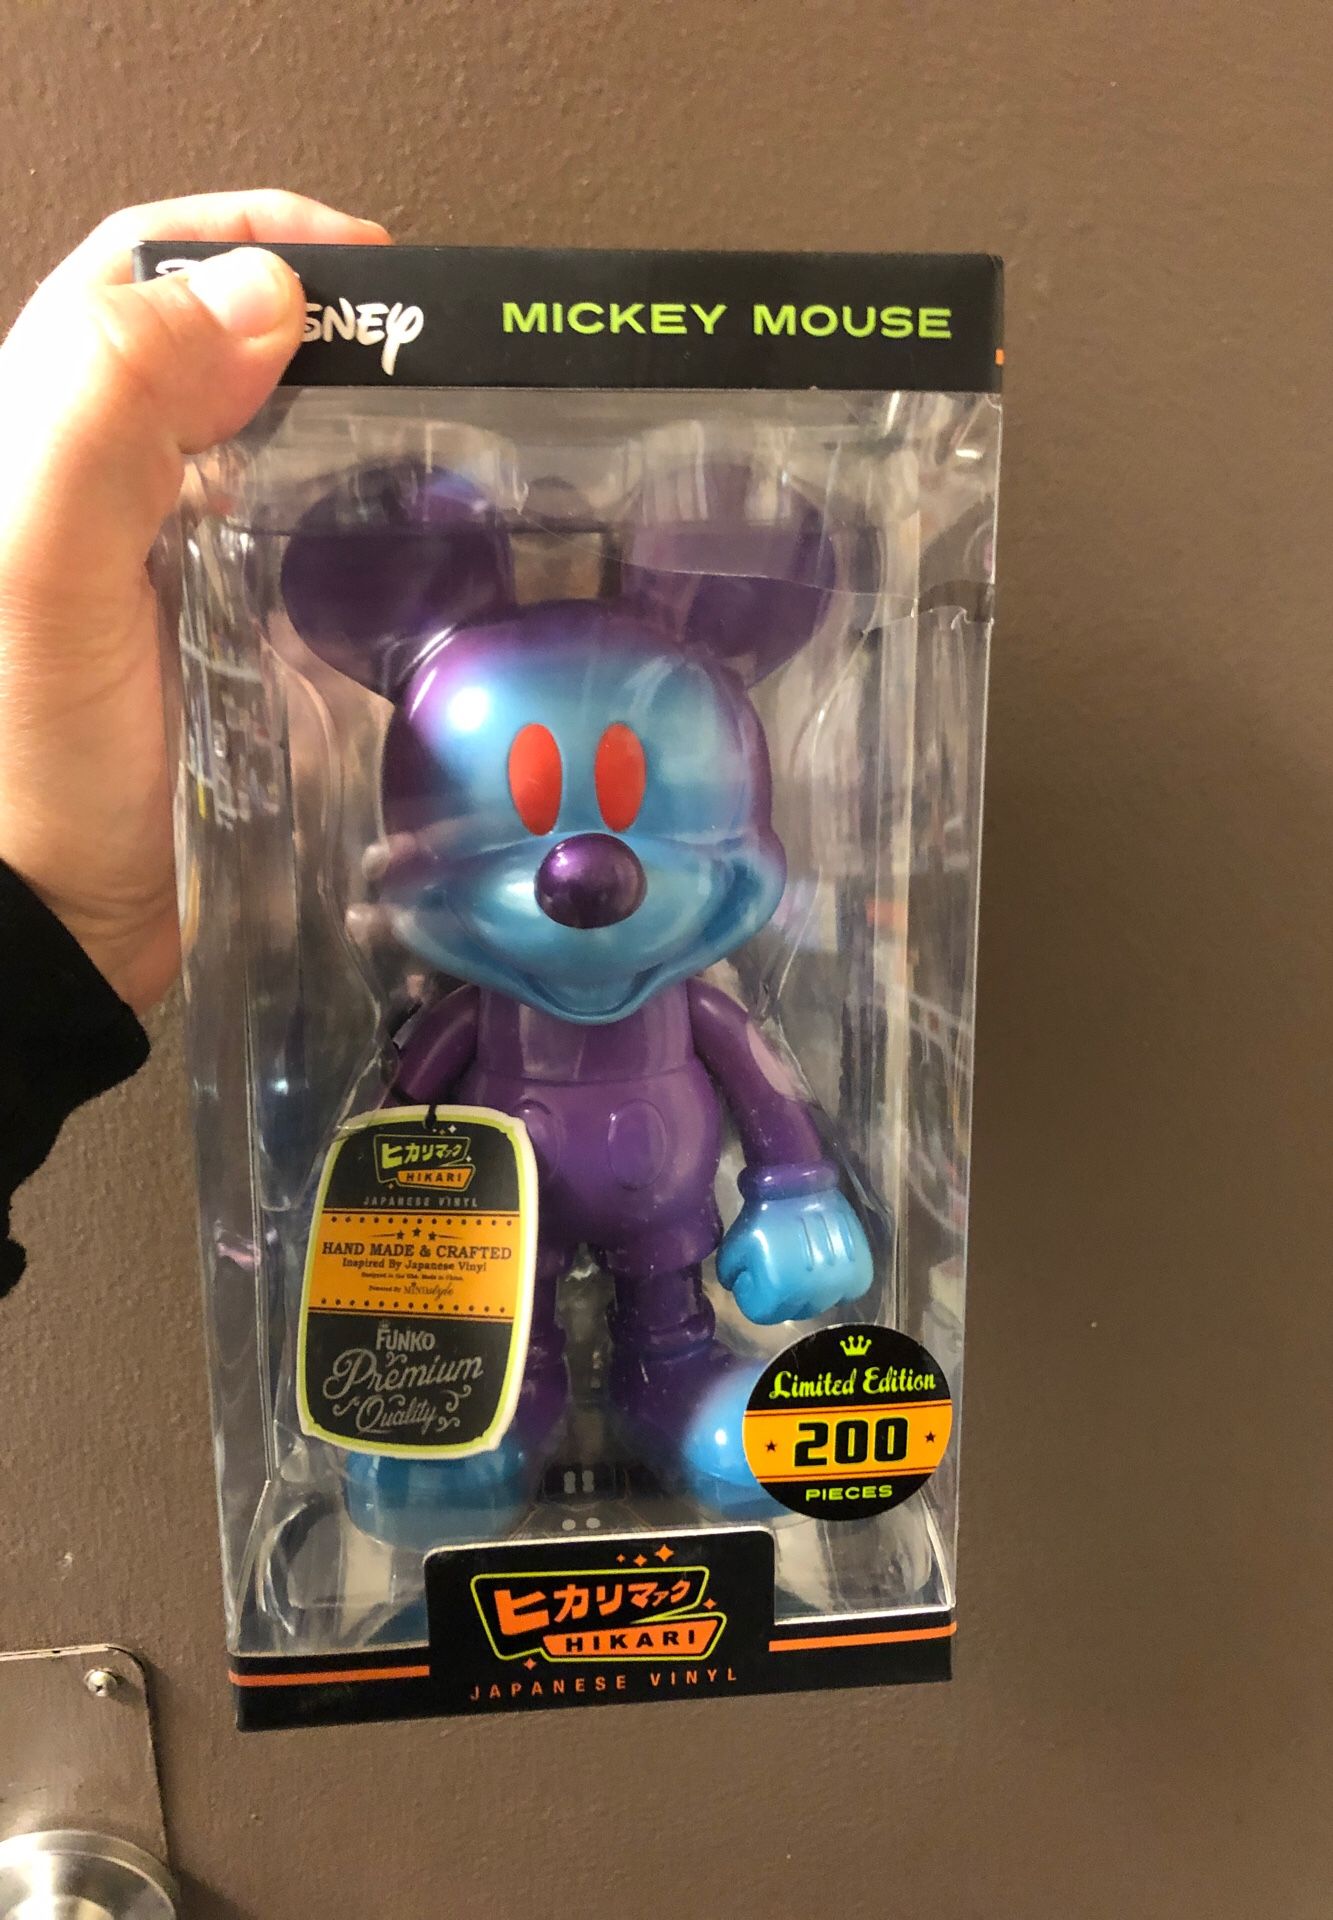 Mucky mouse Hikari 200 piece